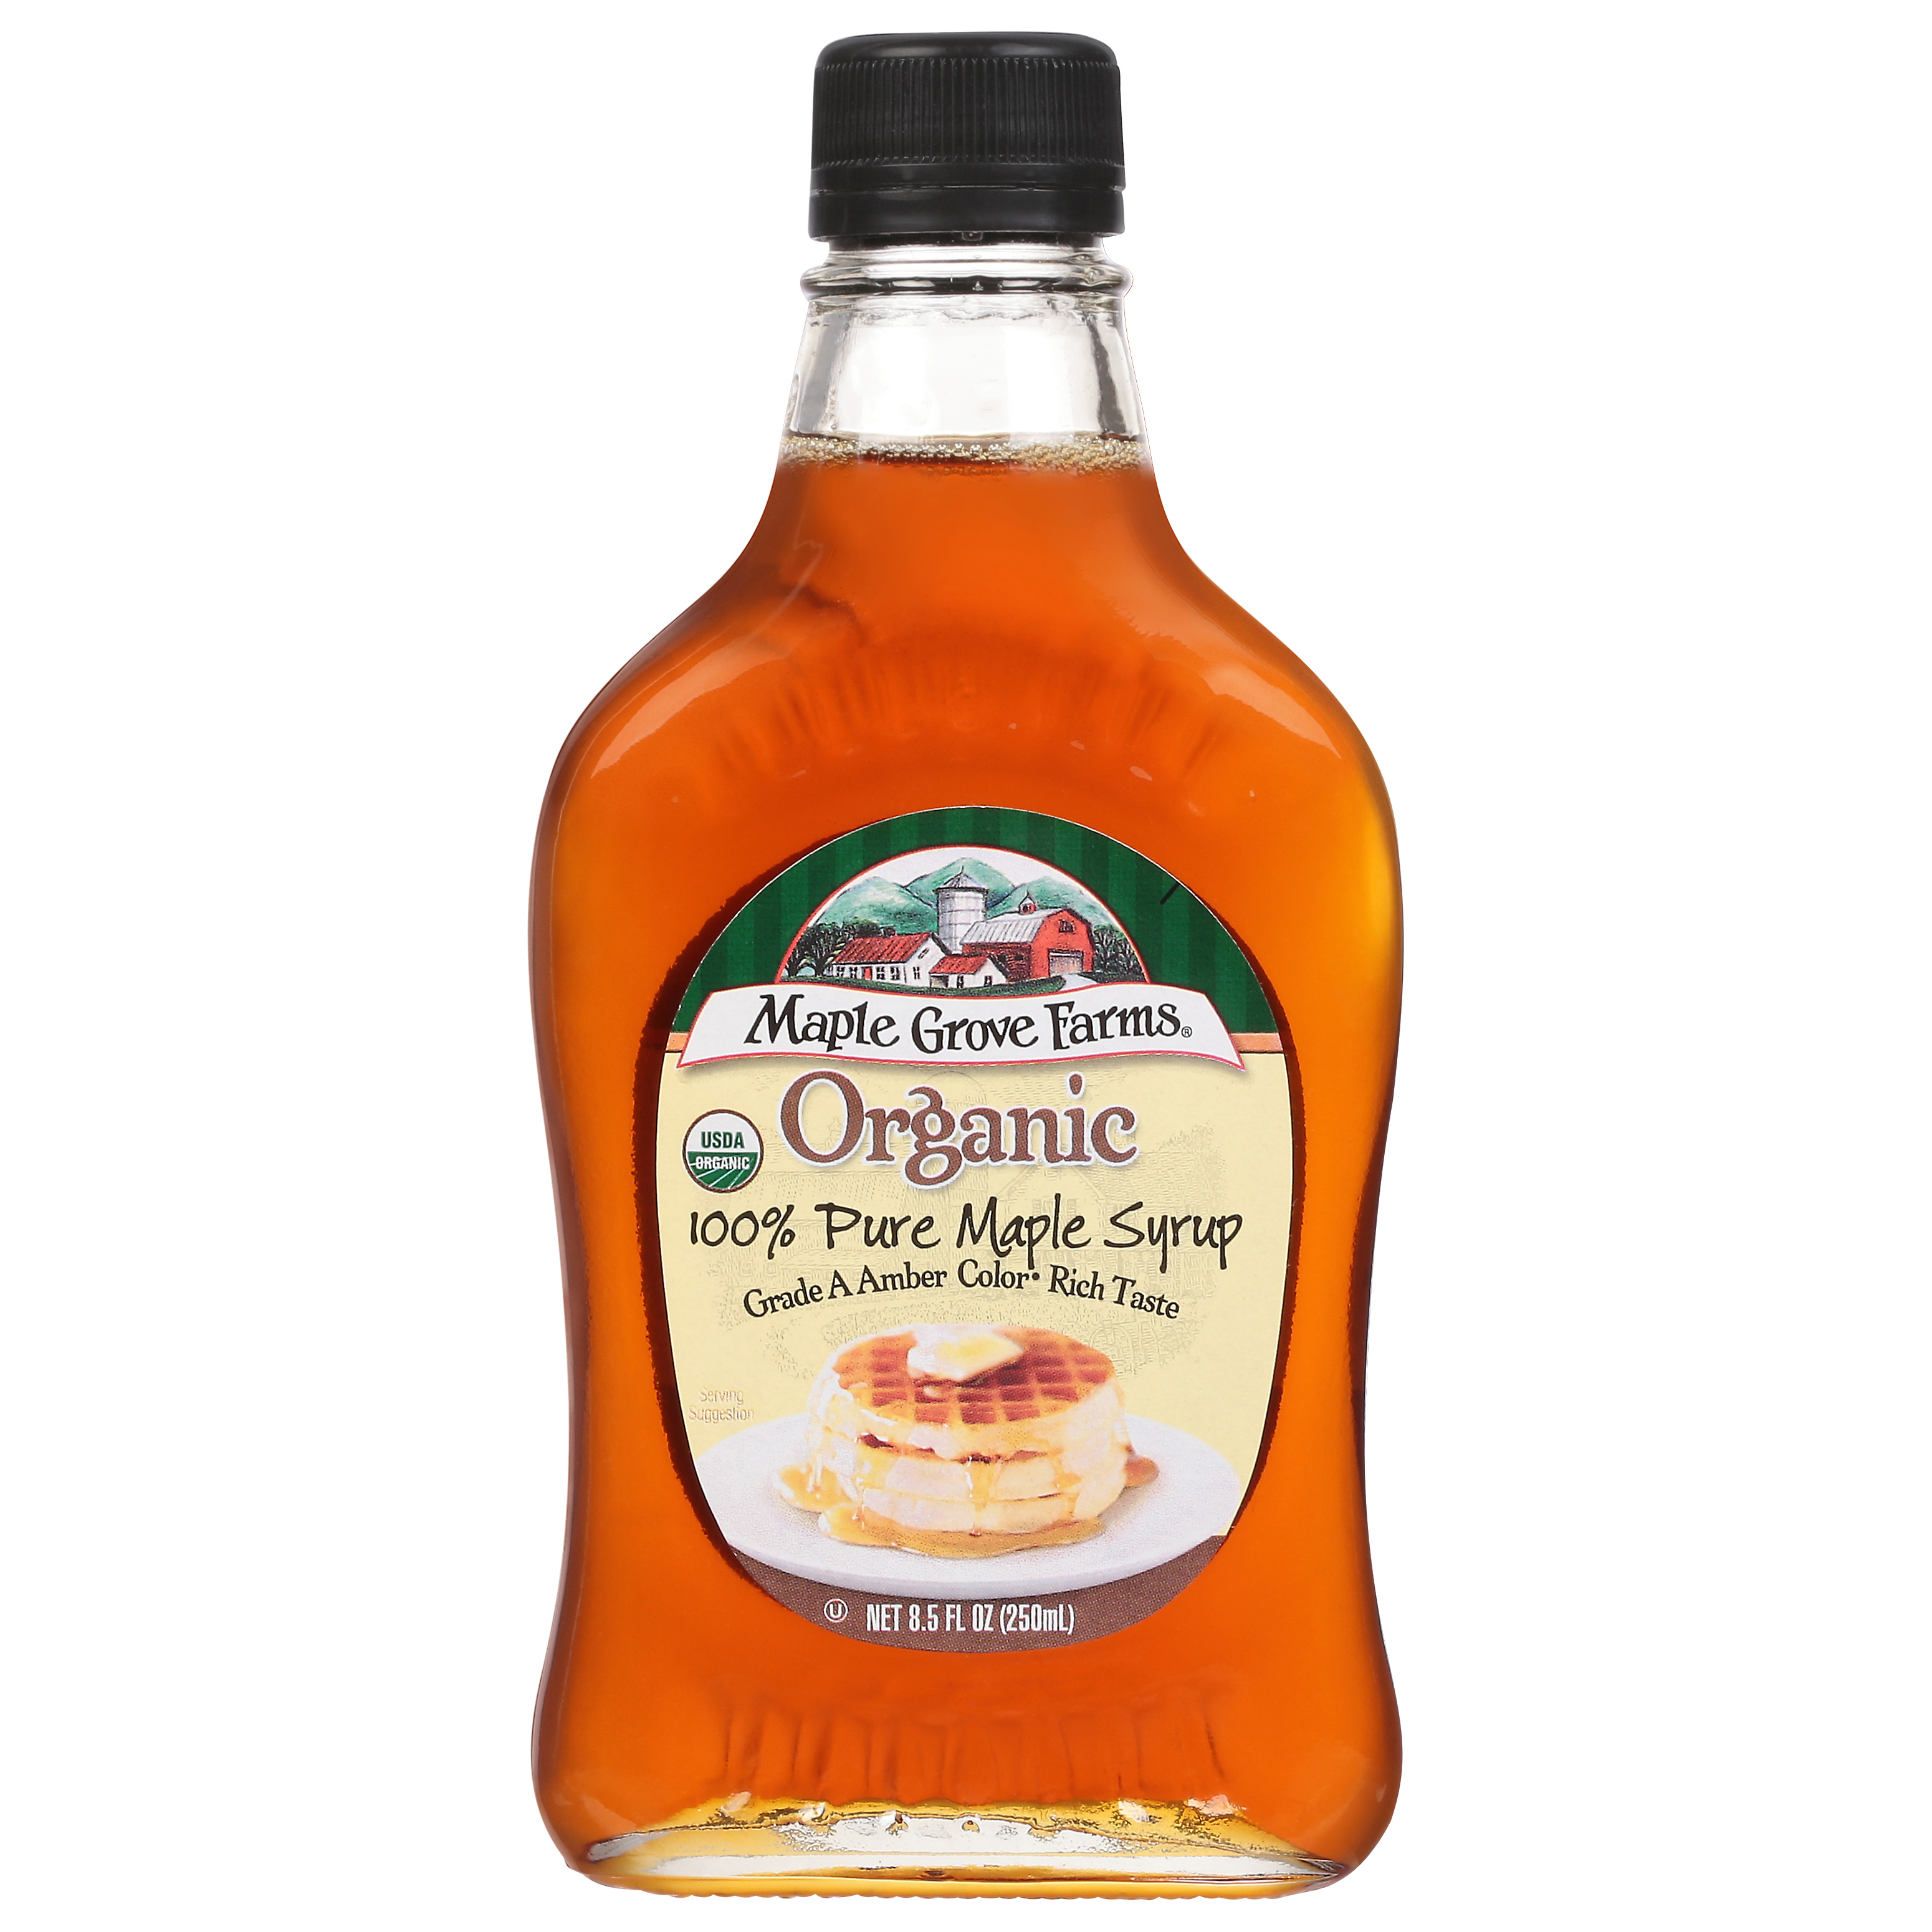 Maple Grove Farms Organic Pure Maple Syrup, 8.5 fl oz - image 1 of 4